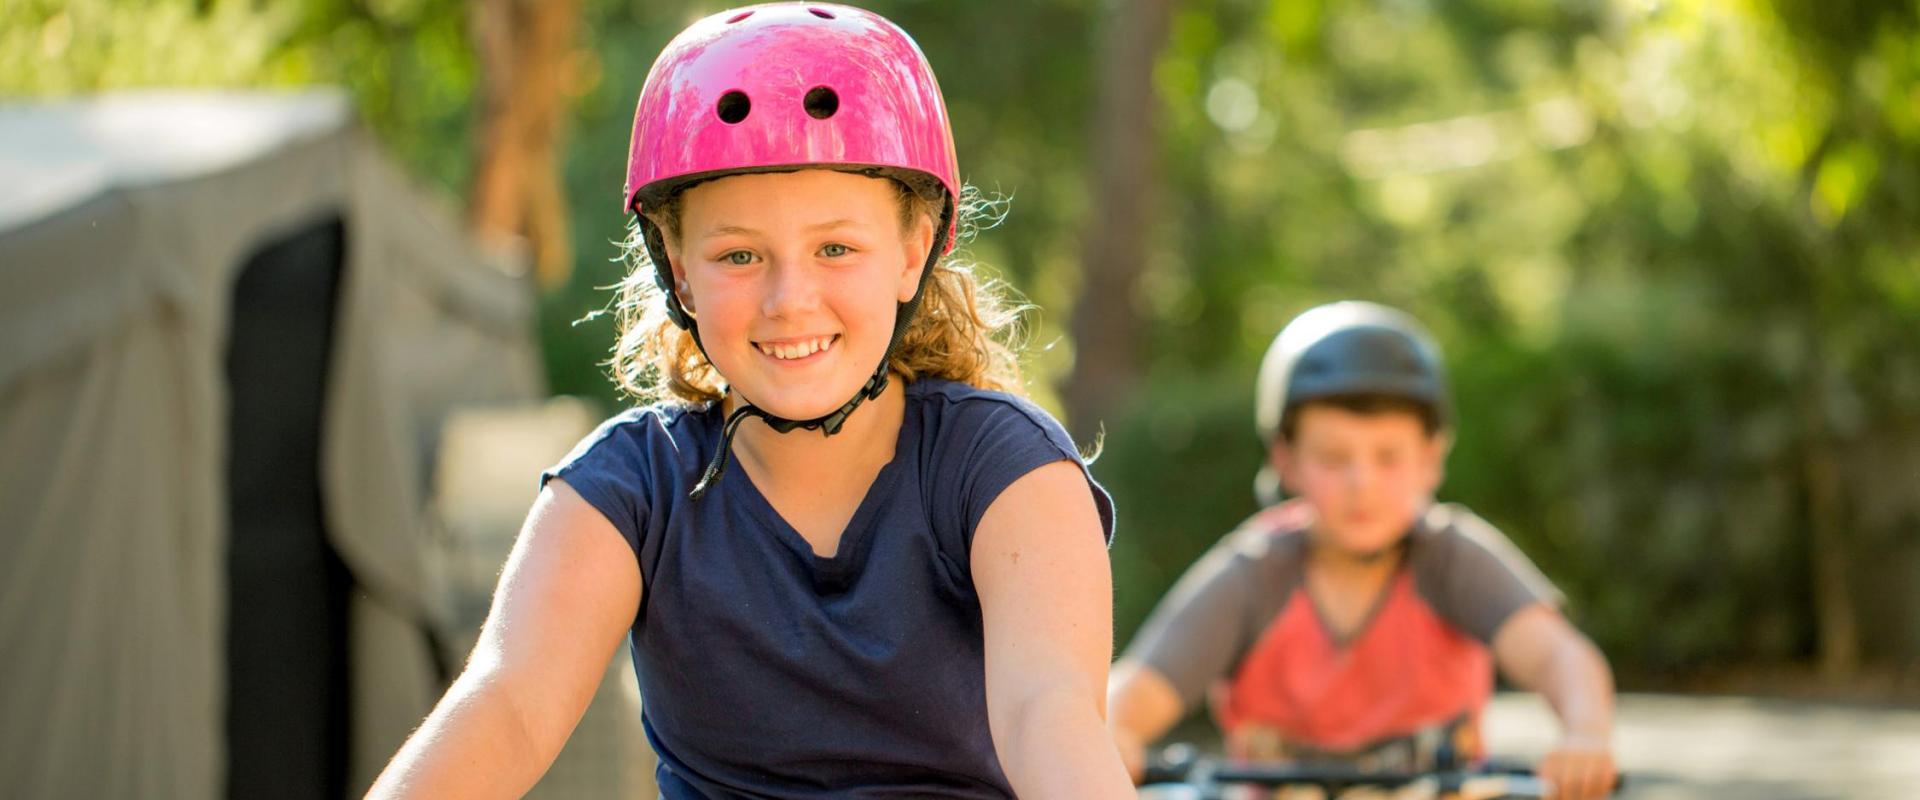 BIG4 Yarra Valley Park Lane Holiday Park - Kids riding bikes